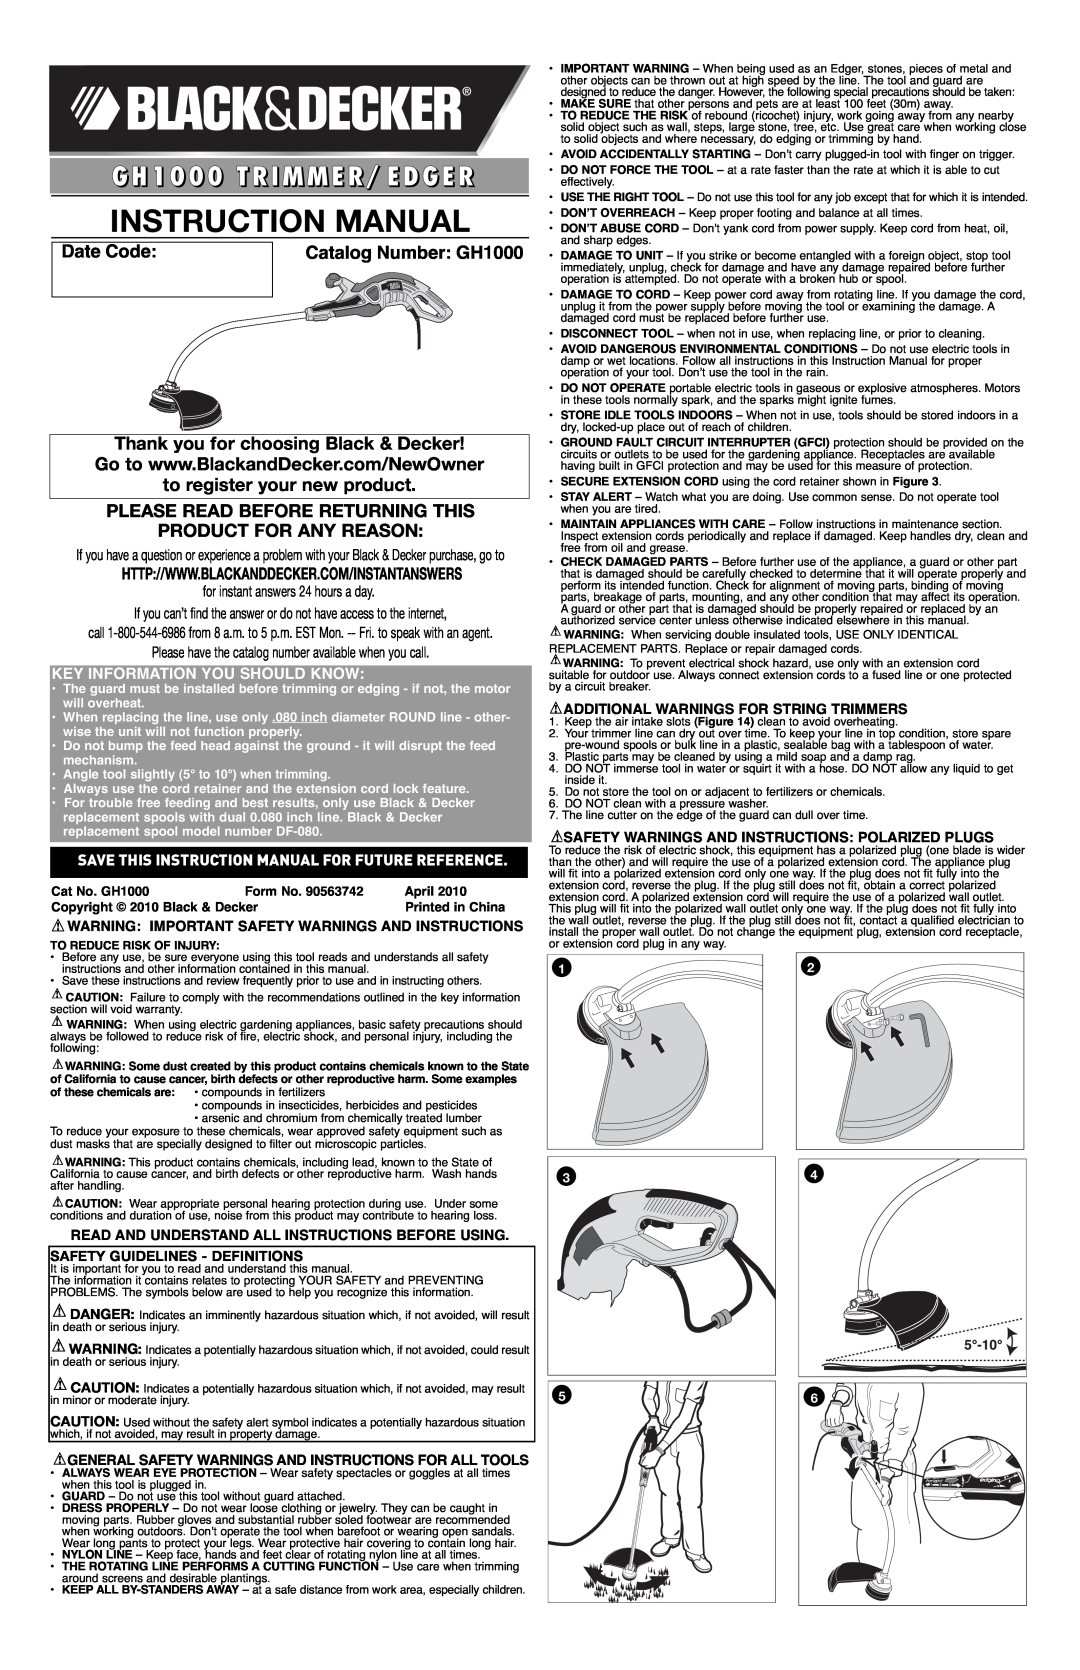 Black & Decker 311066C instruction manual GH1000 TRIMMER/EDGER, Thank you for choosing Black & Decker, Date Code, Form No 